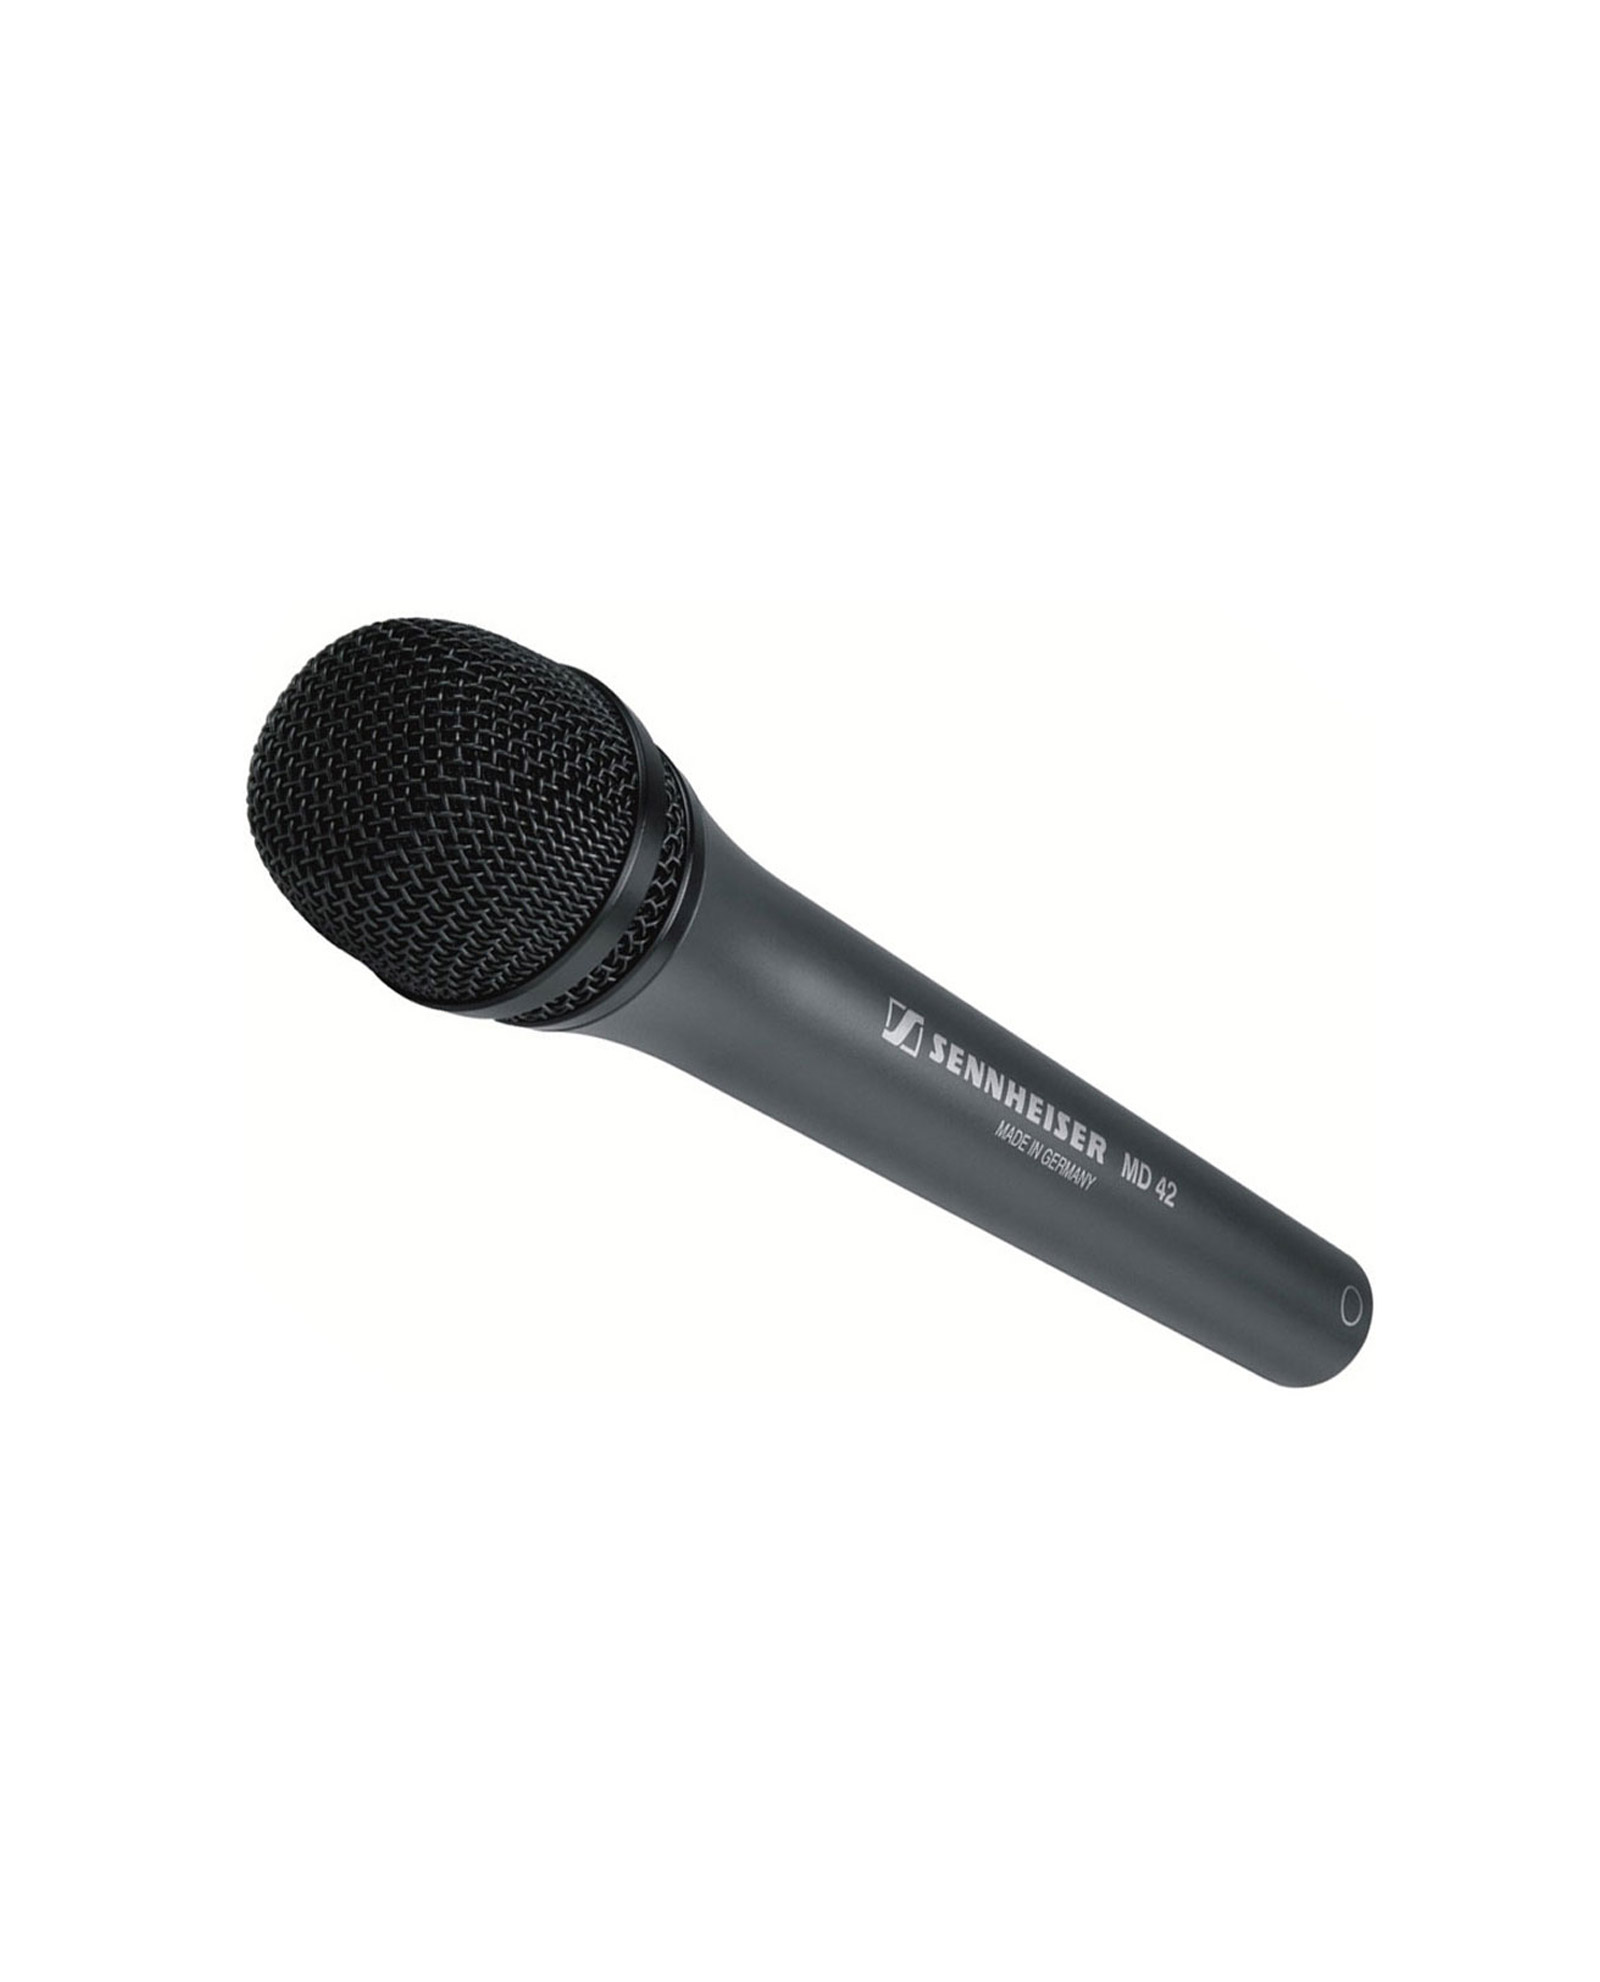 Sennheiser Md 42 Omni Directional Microphone